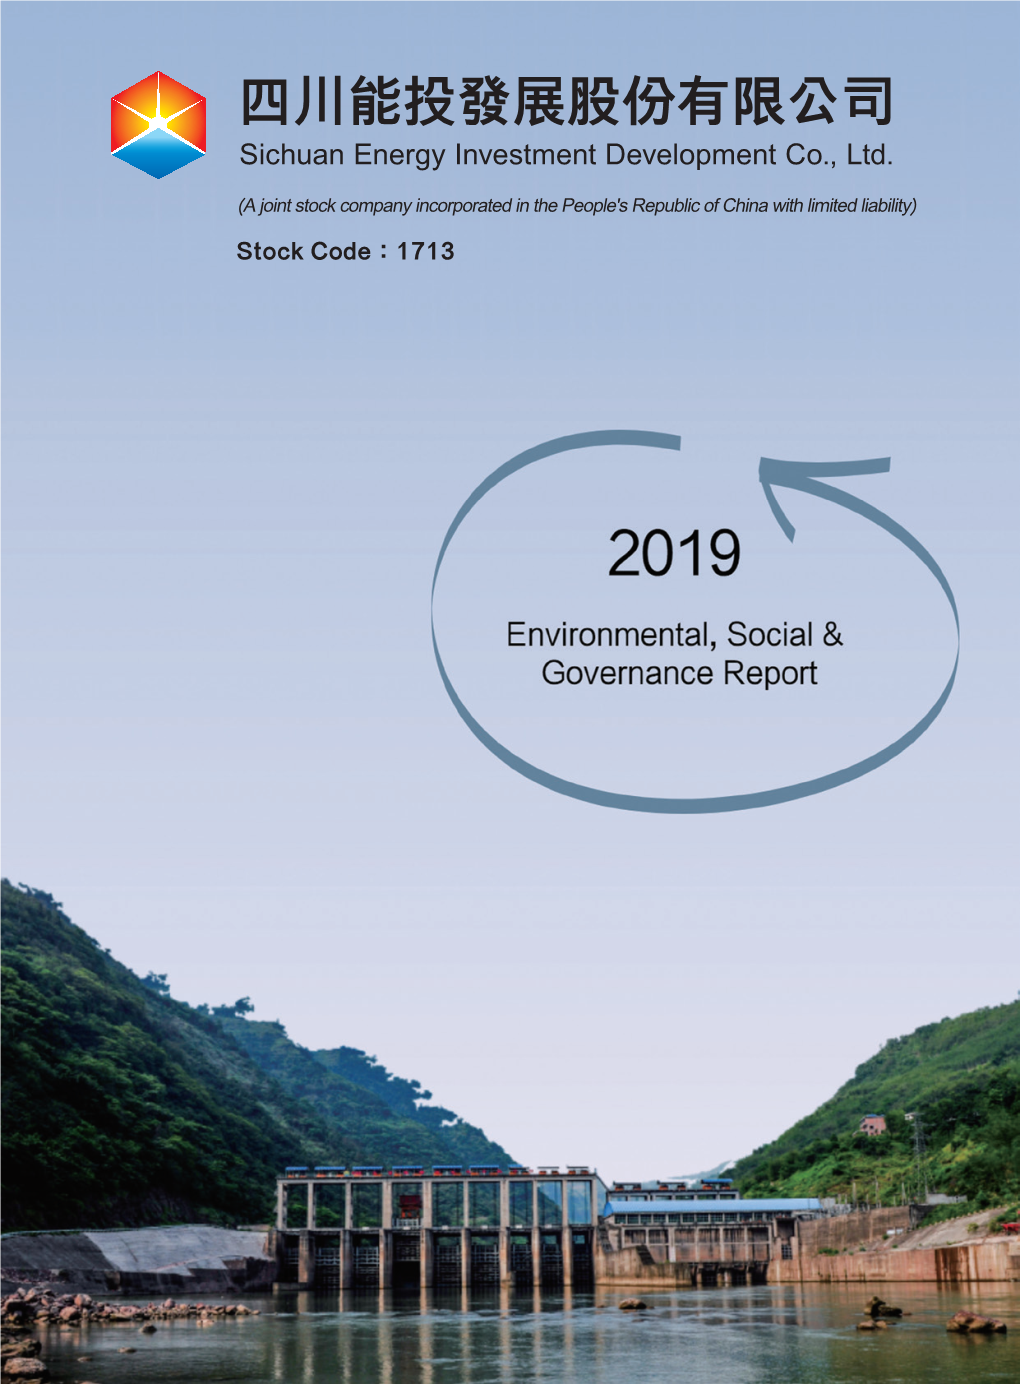 Apr 28, 2020 2019 Environmental, Social & Governance Report